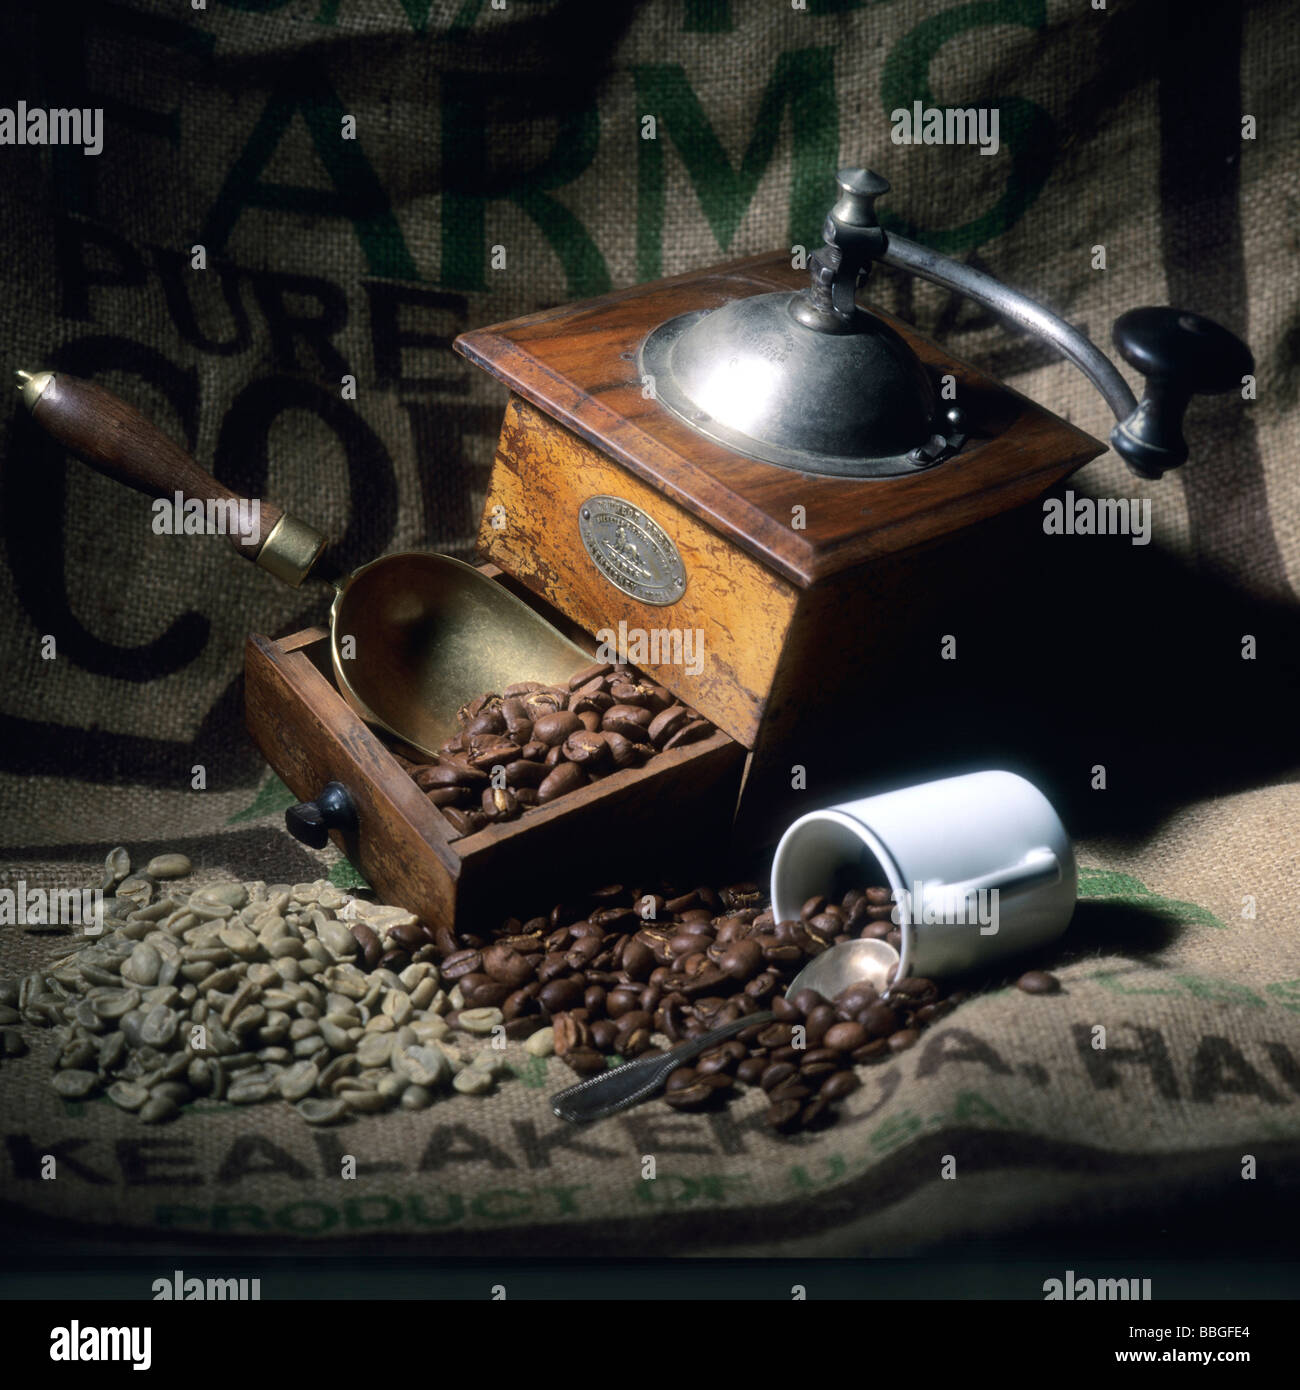 https://c8.alamy.com/comp/BBGFE4/old-mechanical-coffee-grinder-and-coffee-beans-BBGFE4.jpg